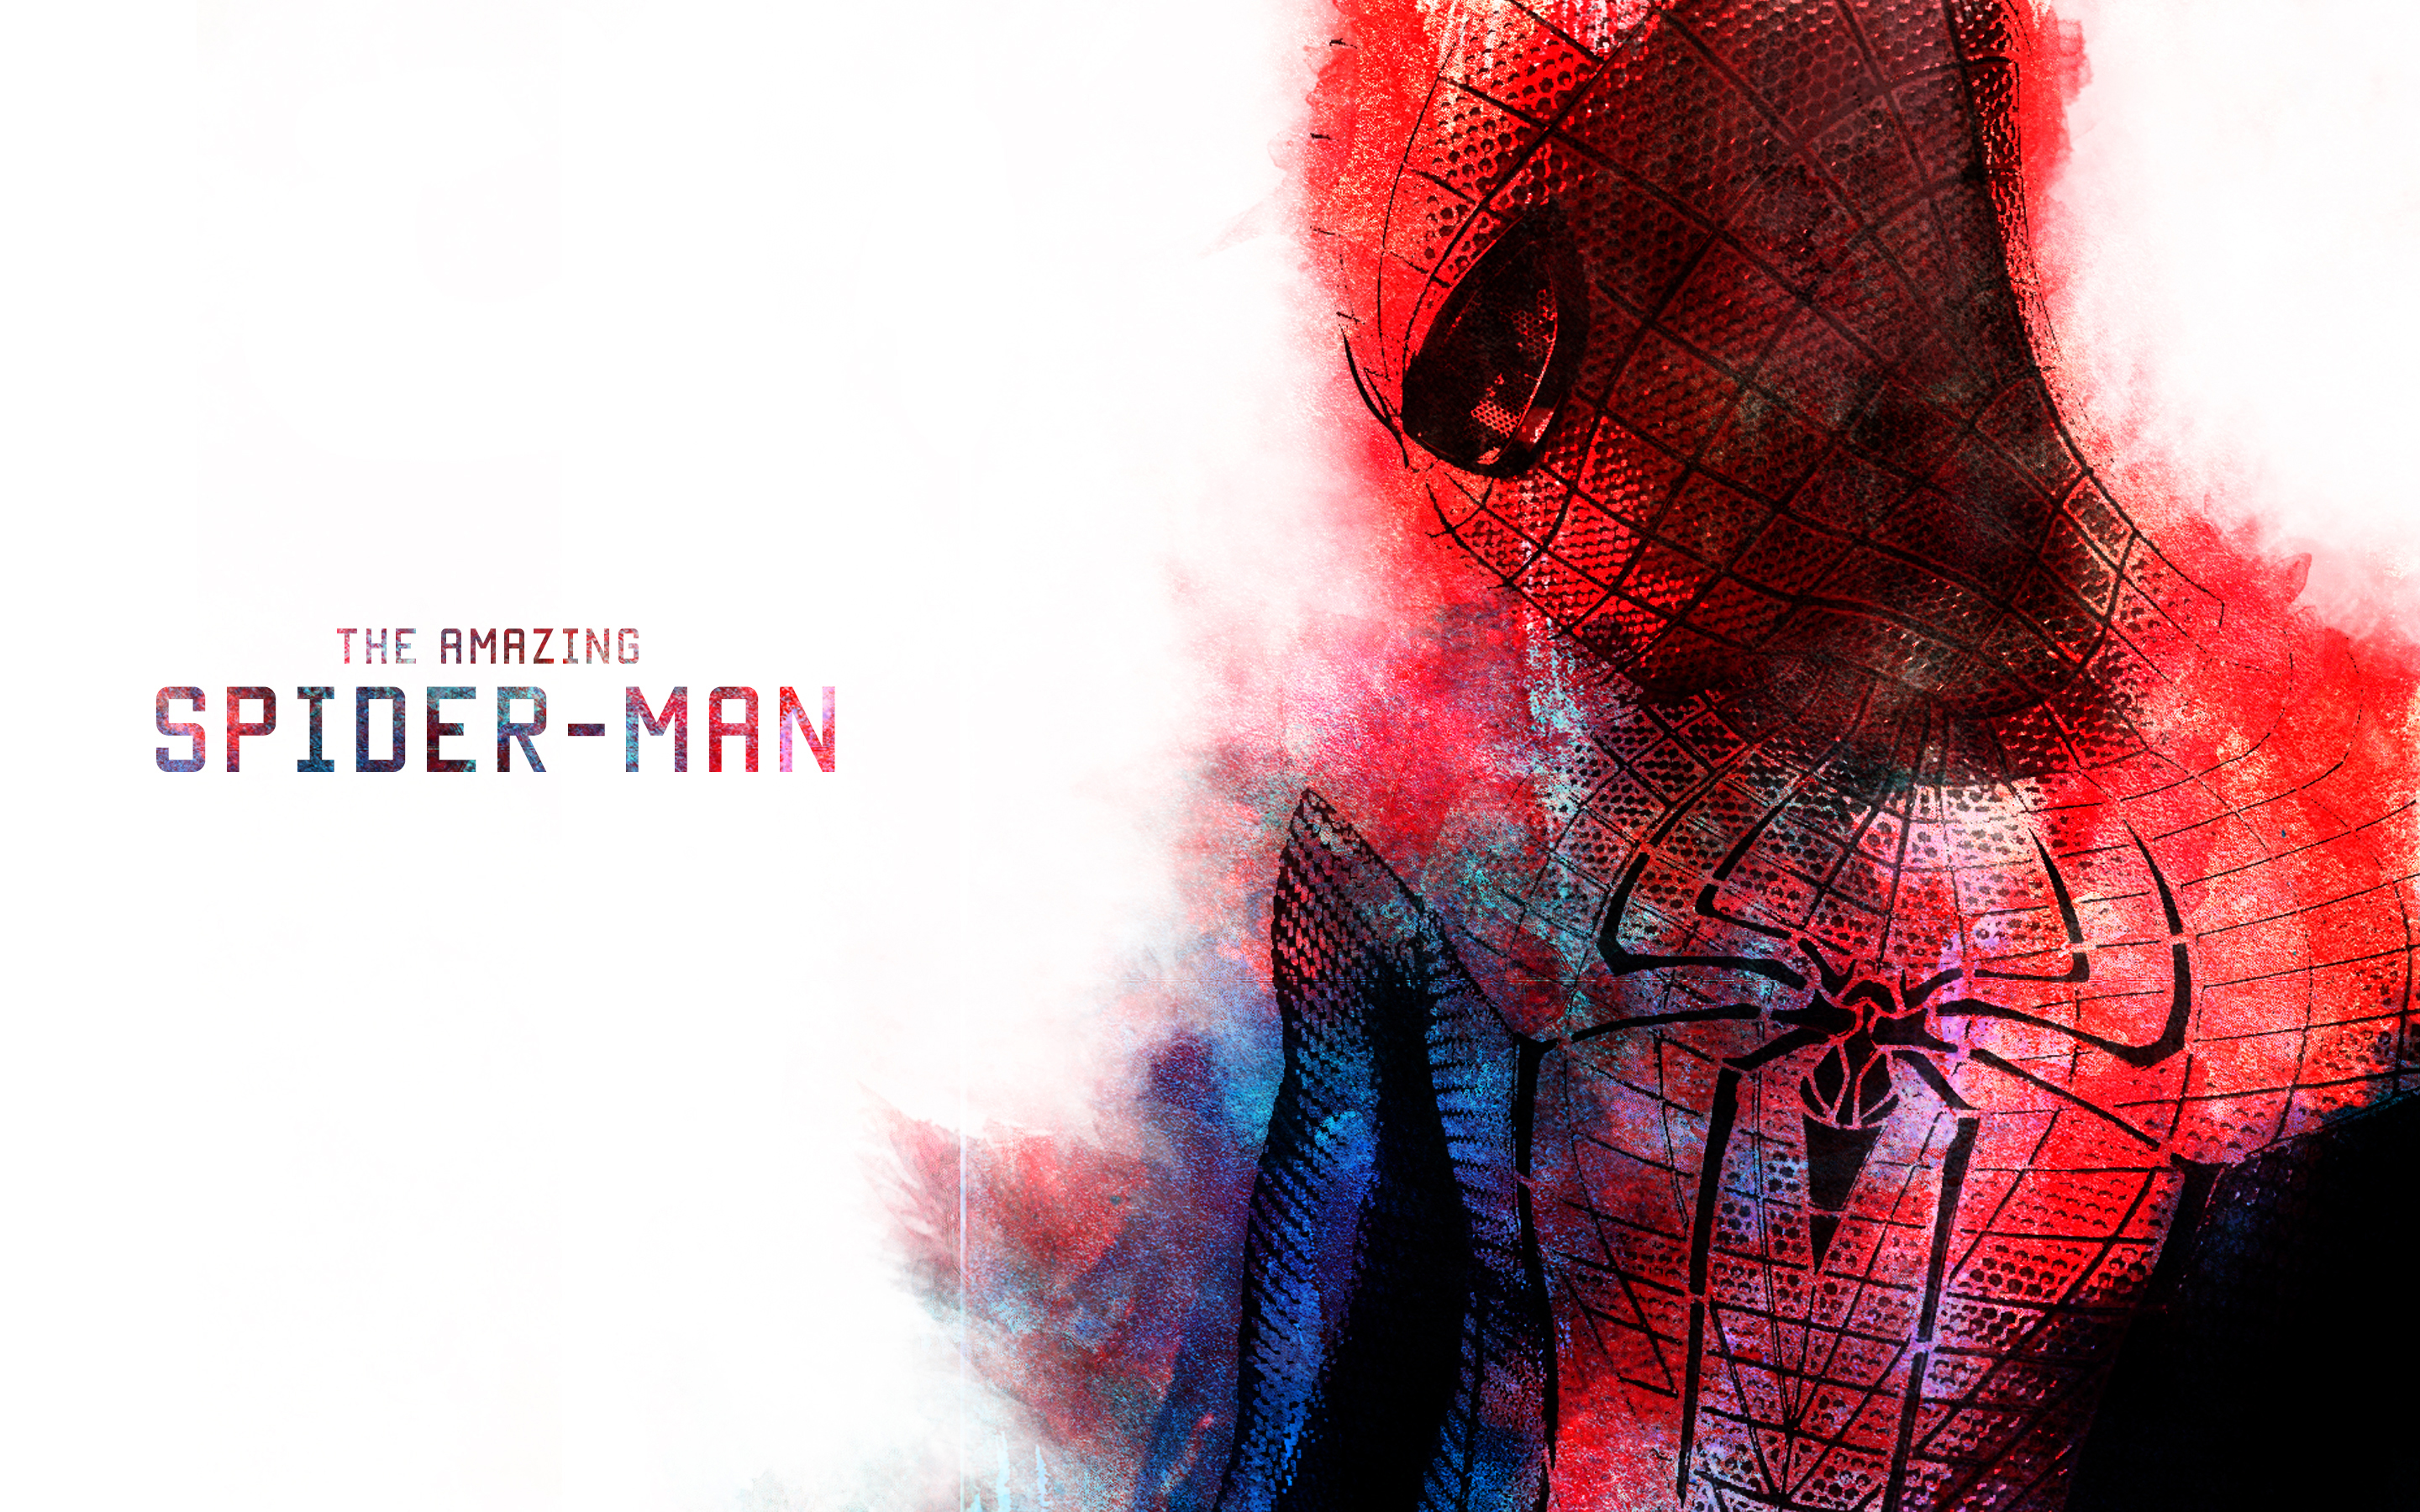 Hot Spiderman Image Download Free